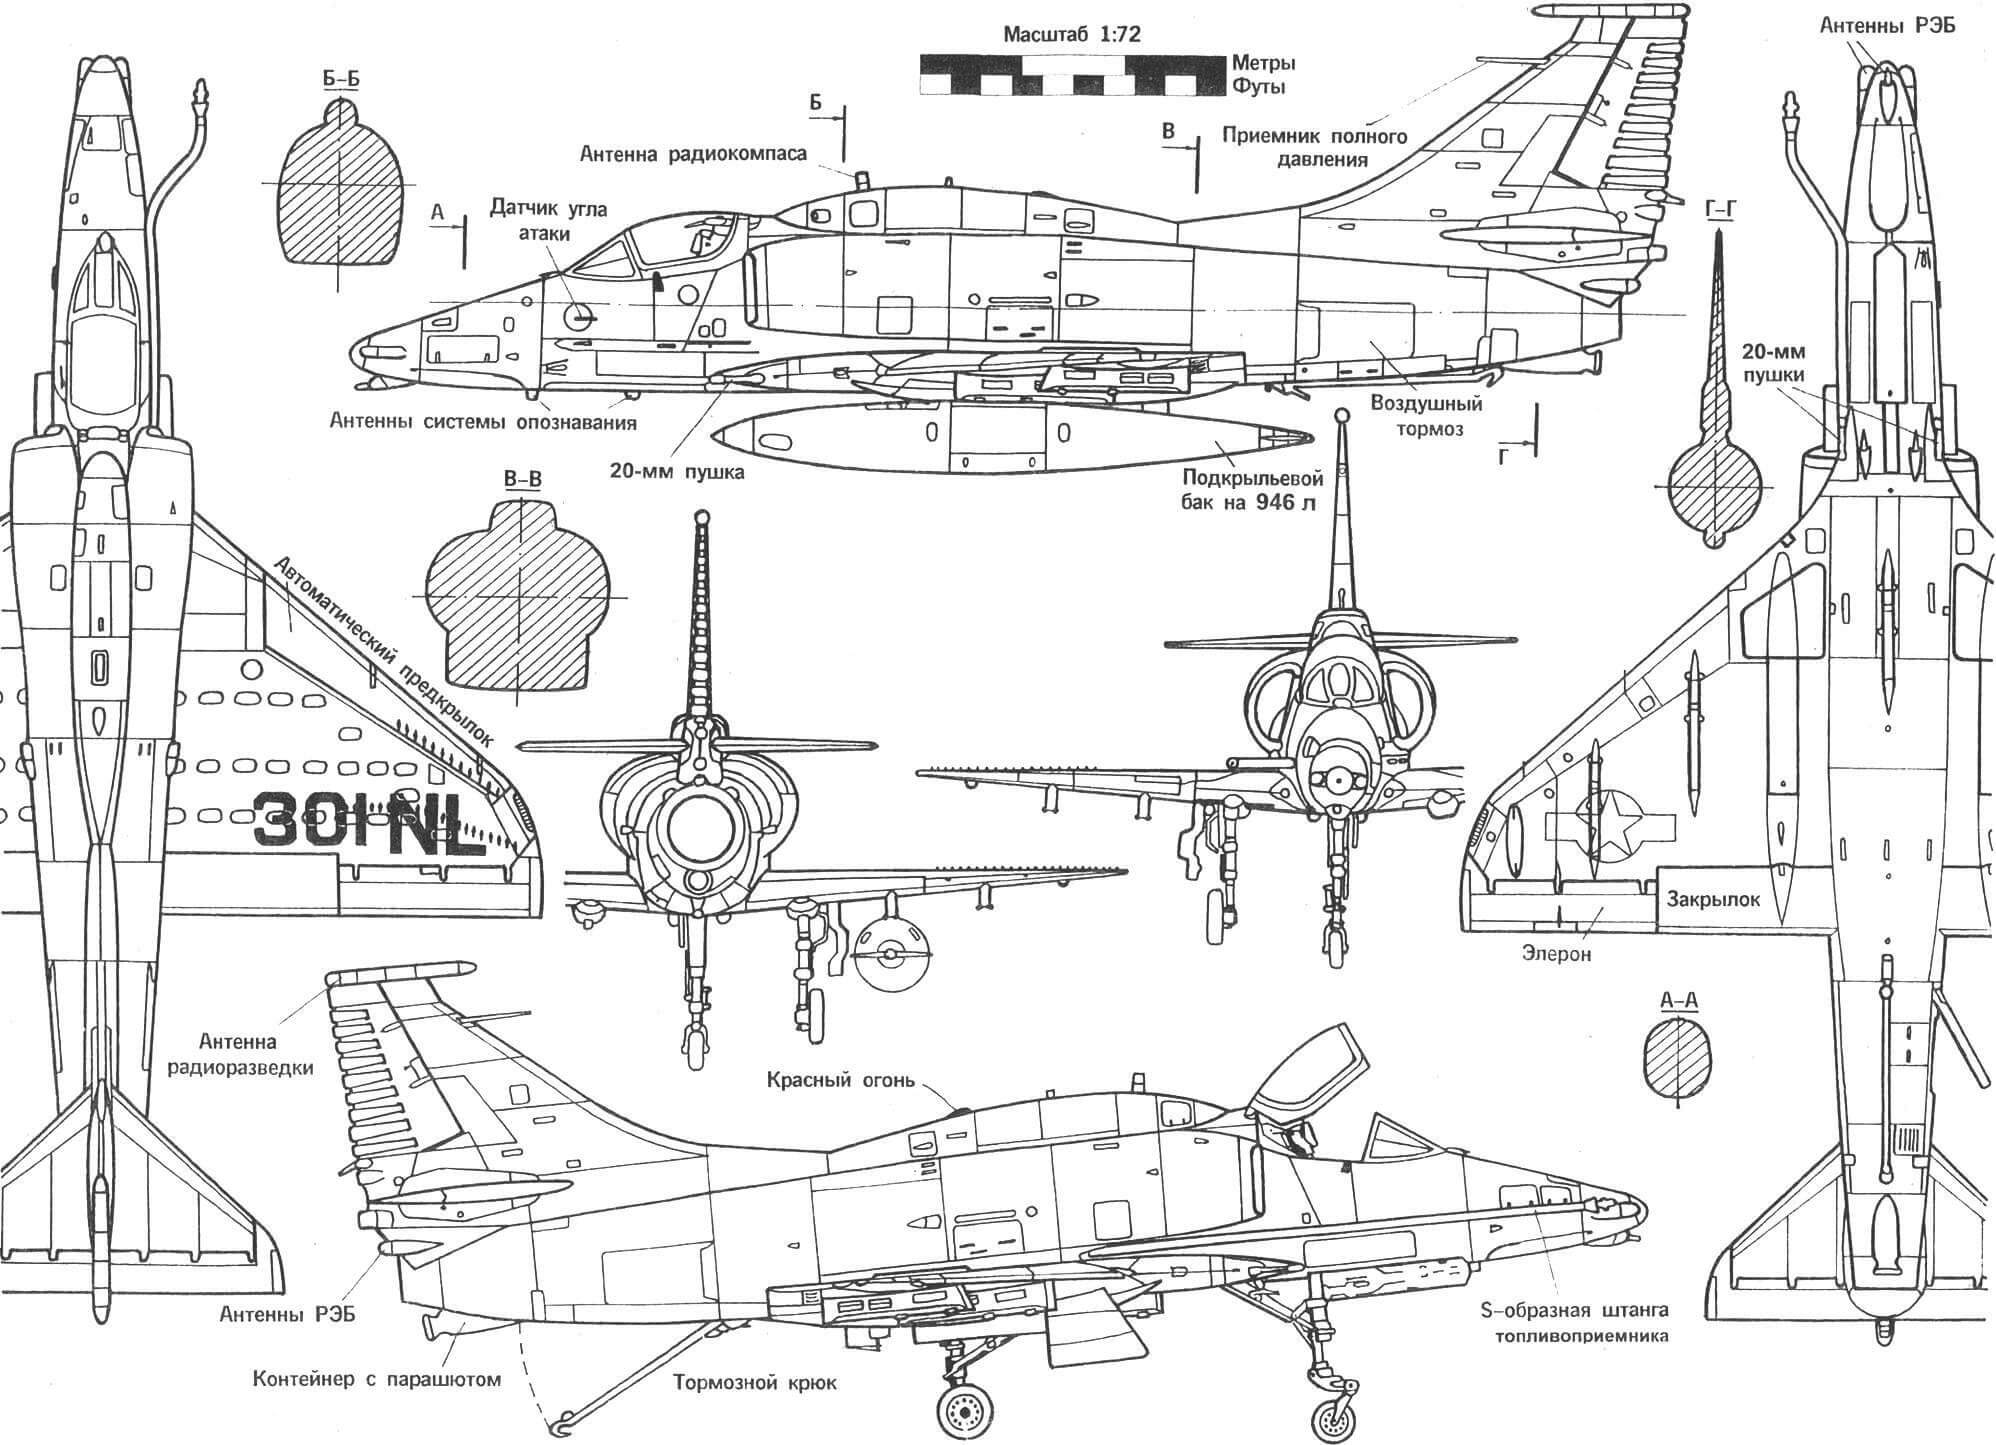 Douglas А-4М Skyhawk